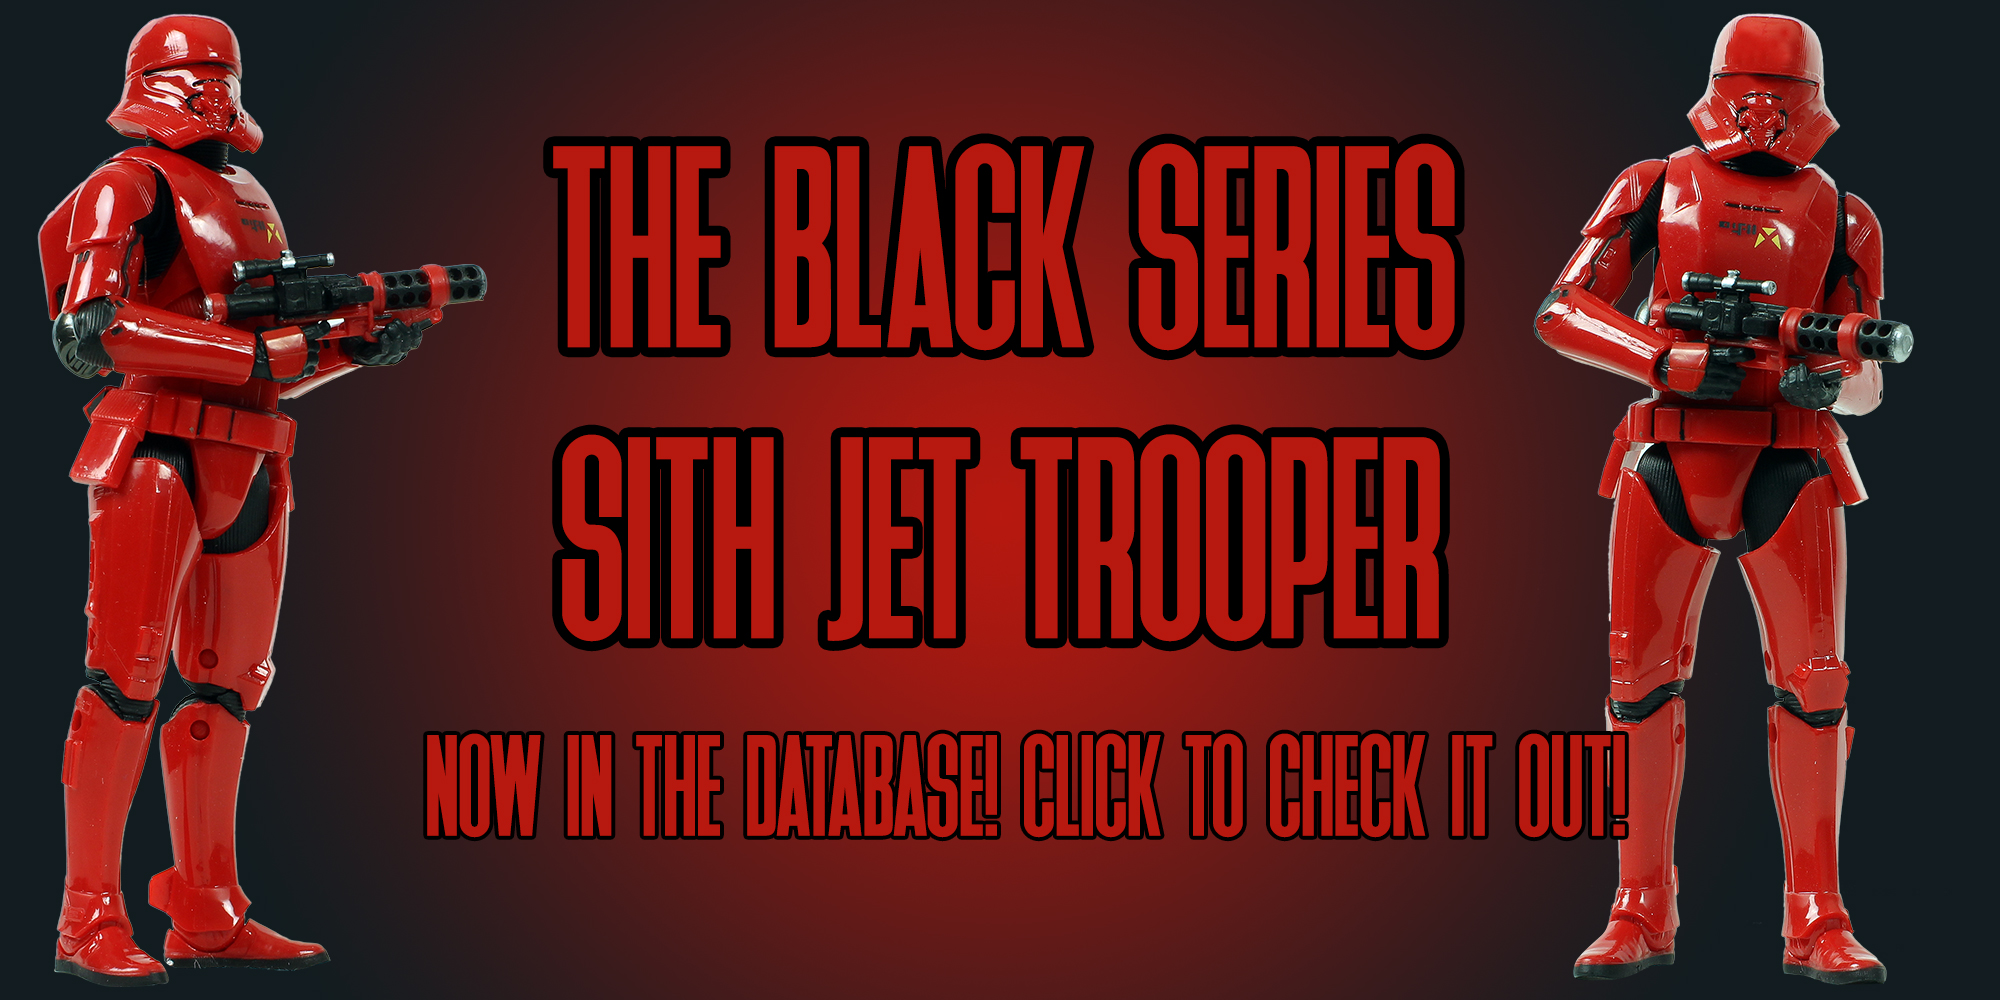 Star Wars Black Series Sith Jet Trooper Added